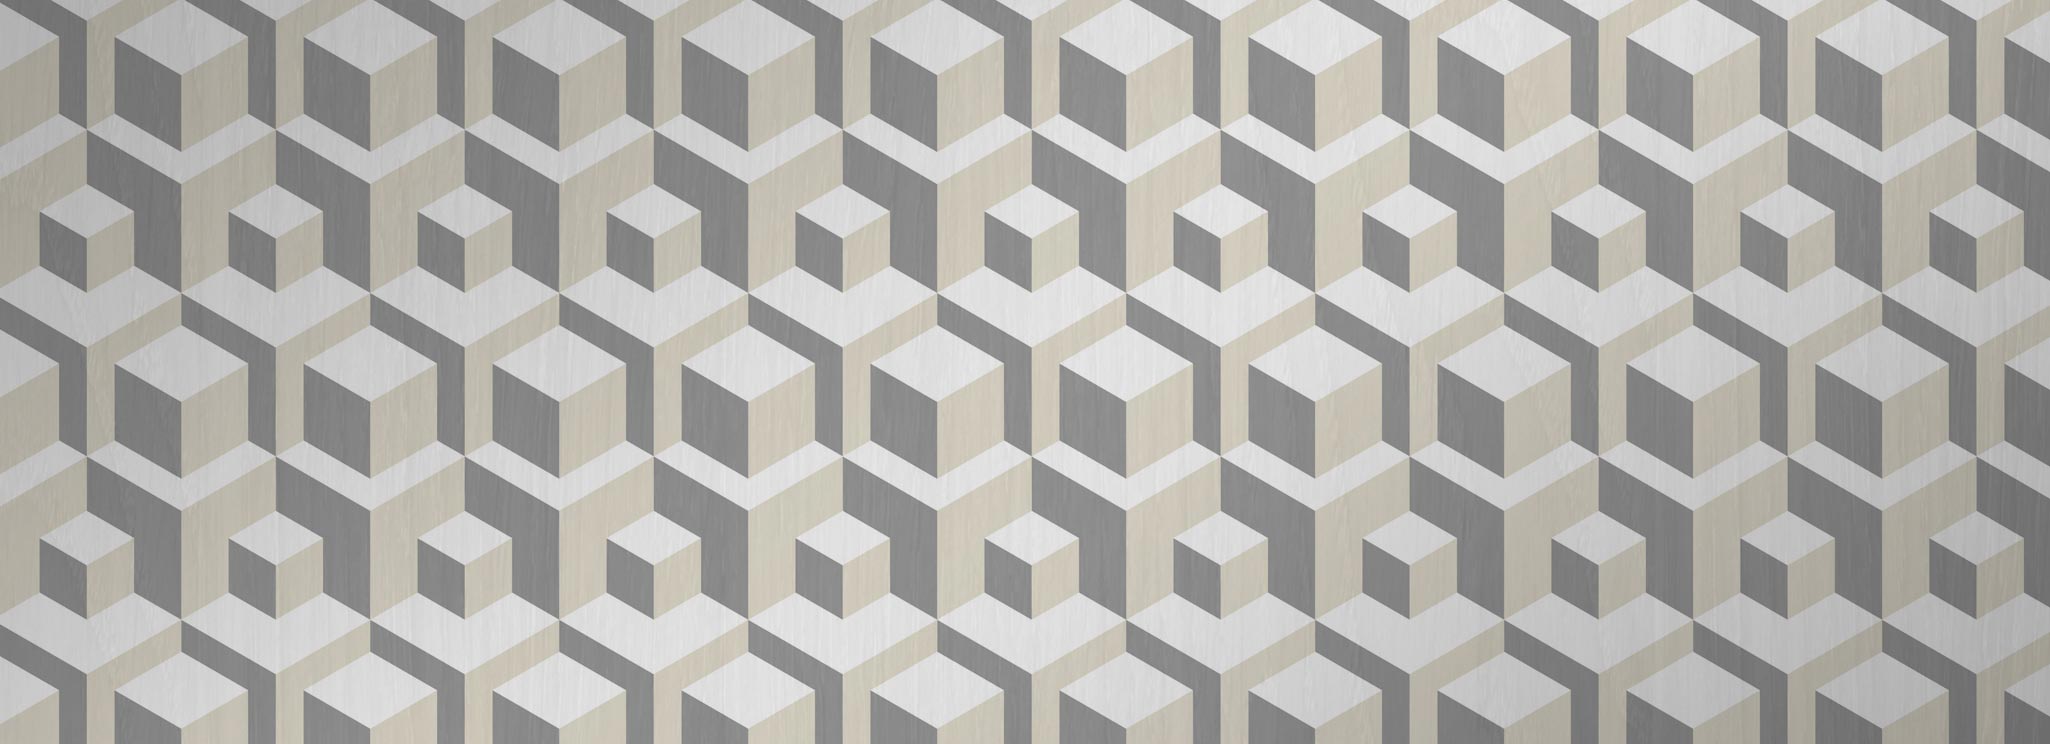 Patterndesign Cubic